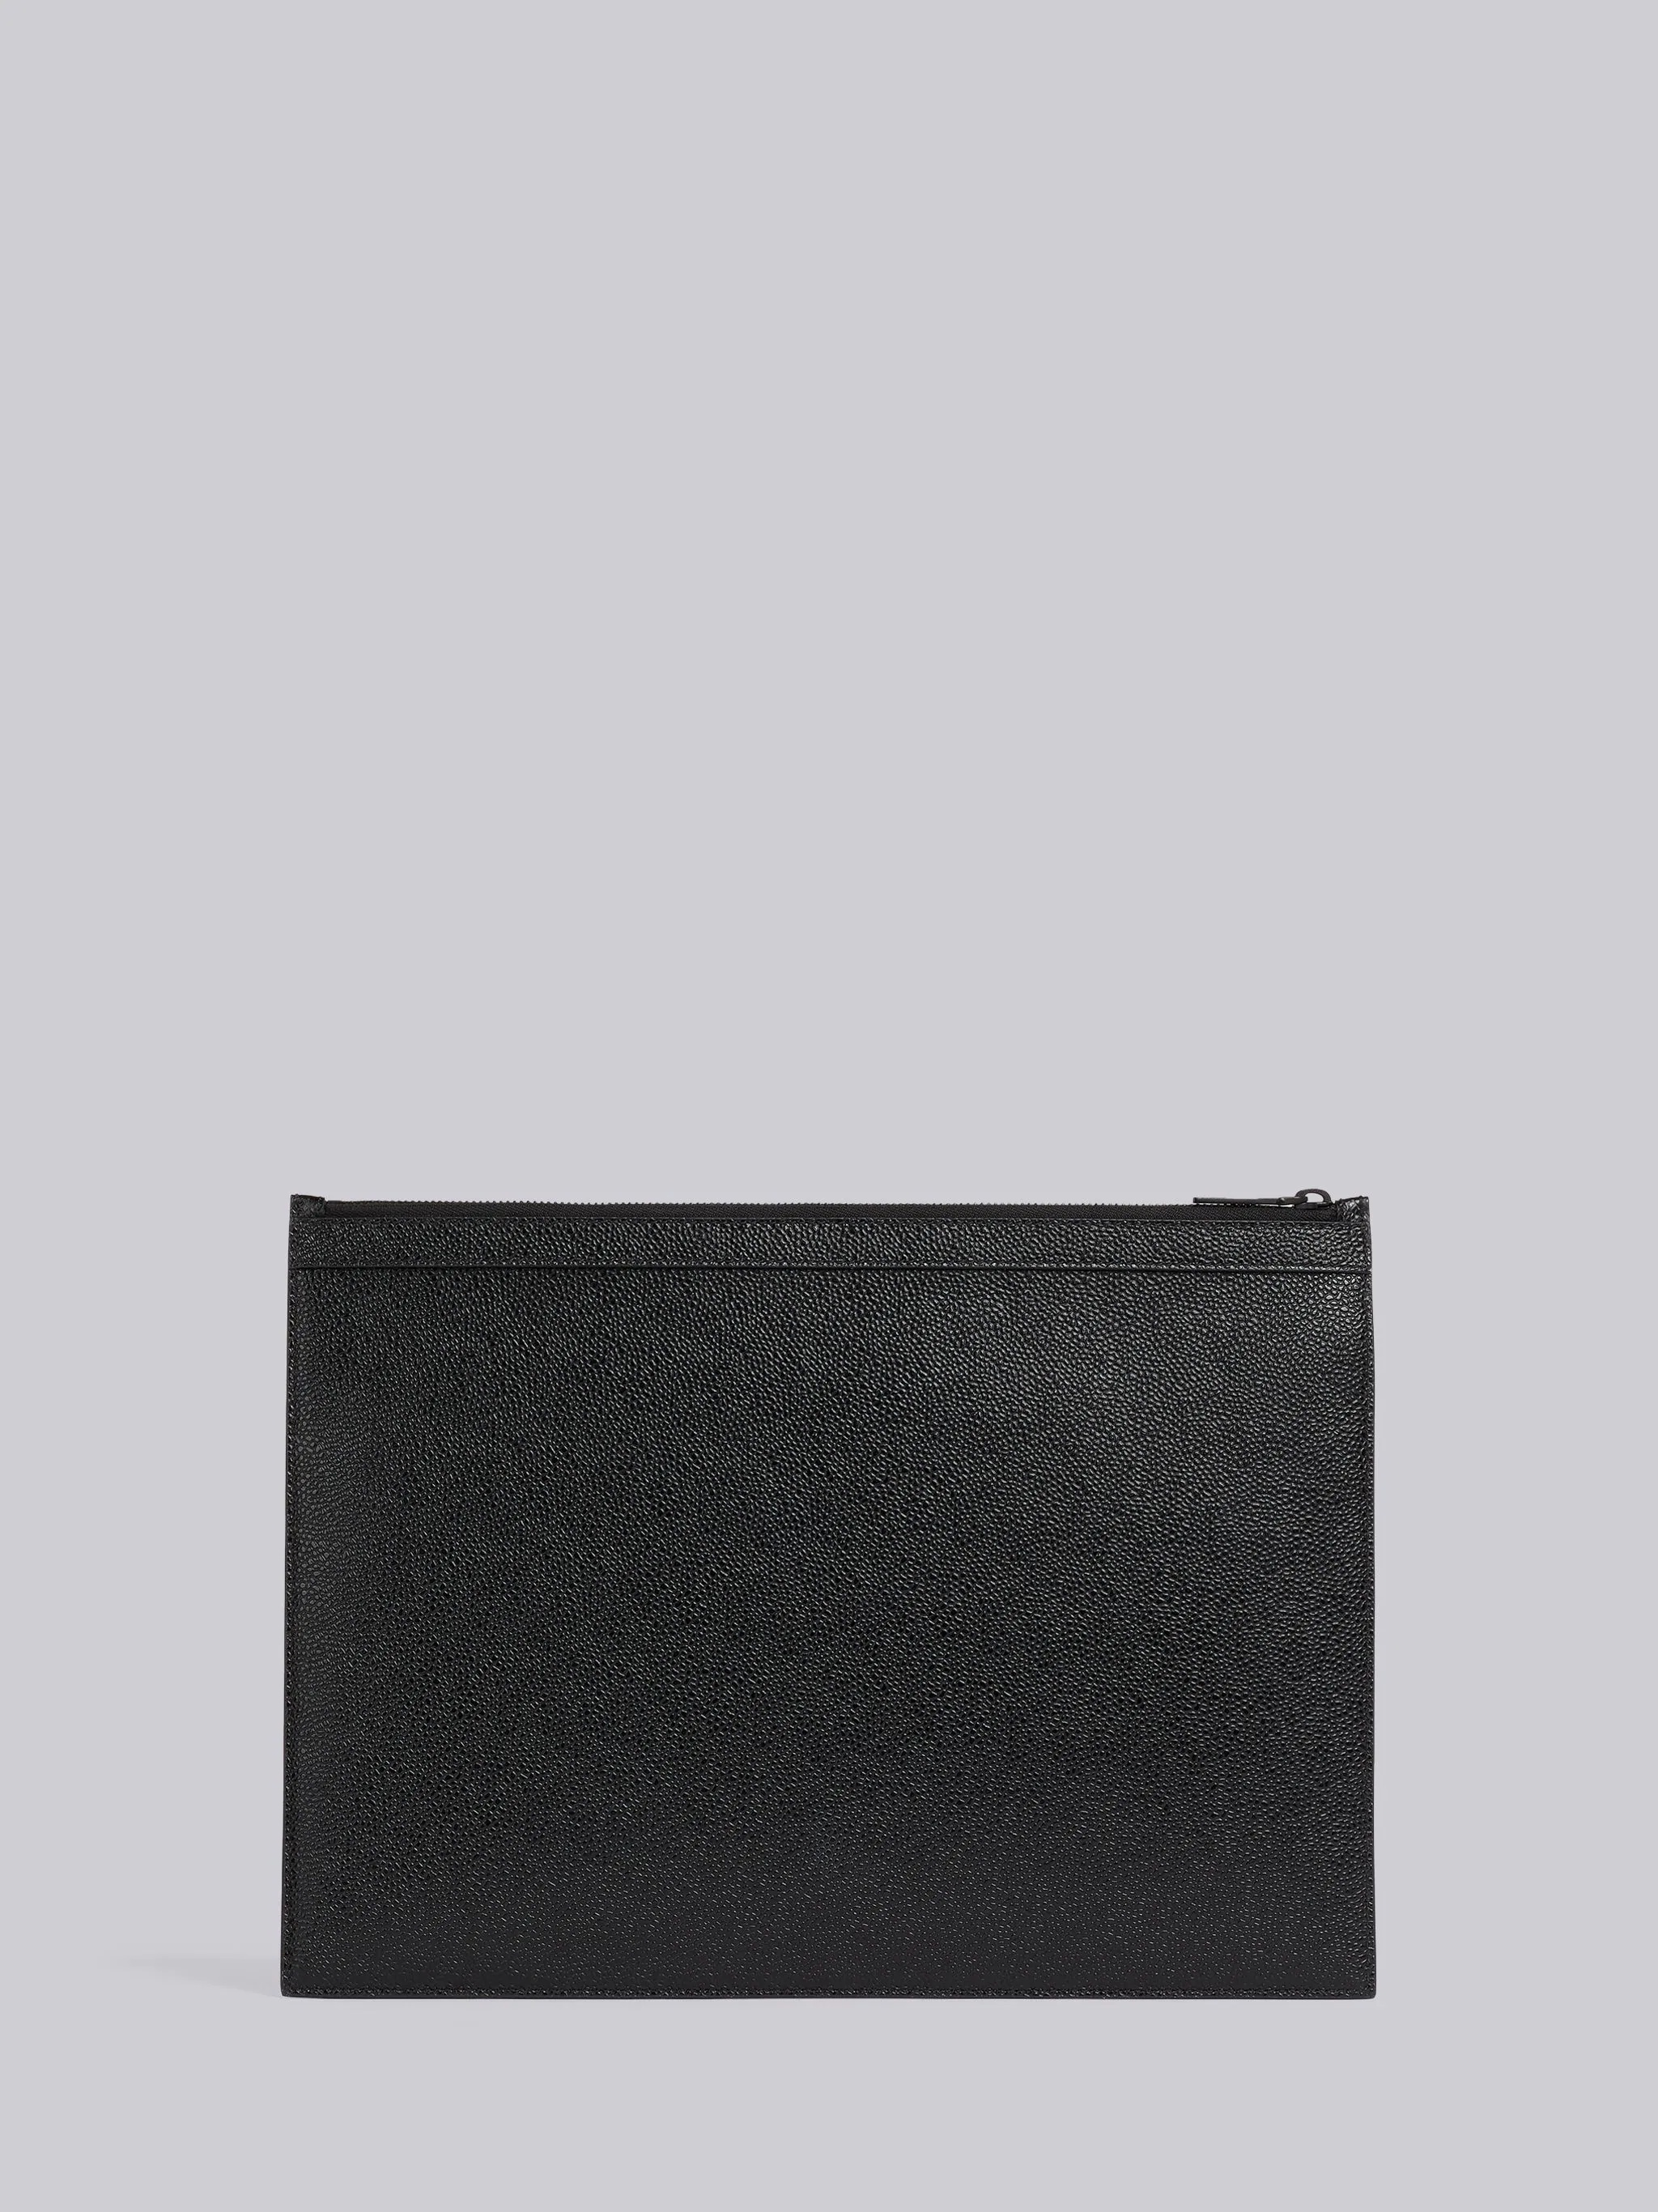 Black Pebble Grain Leather 4-Bar Brass Label Medium Zippered Document Holder - 3